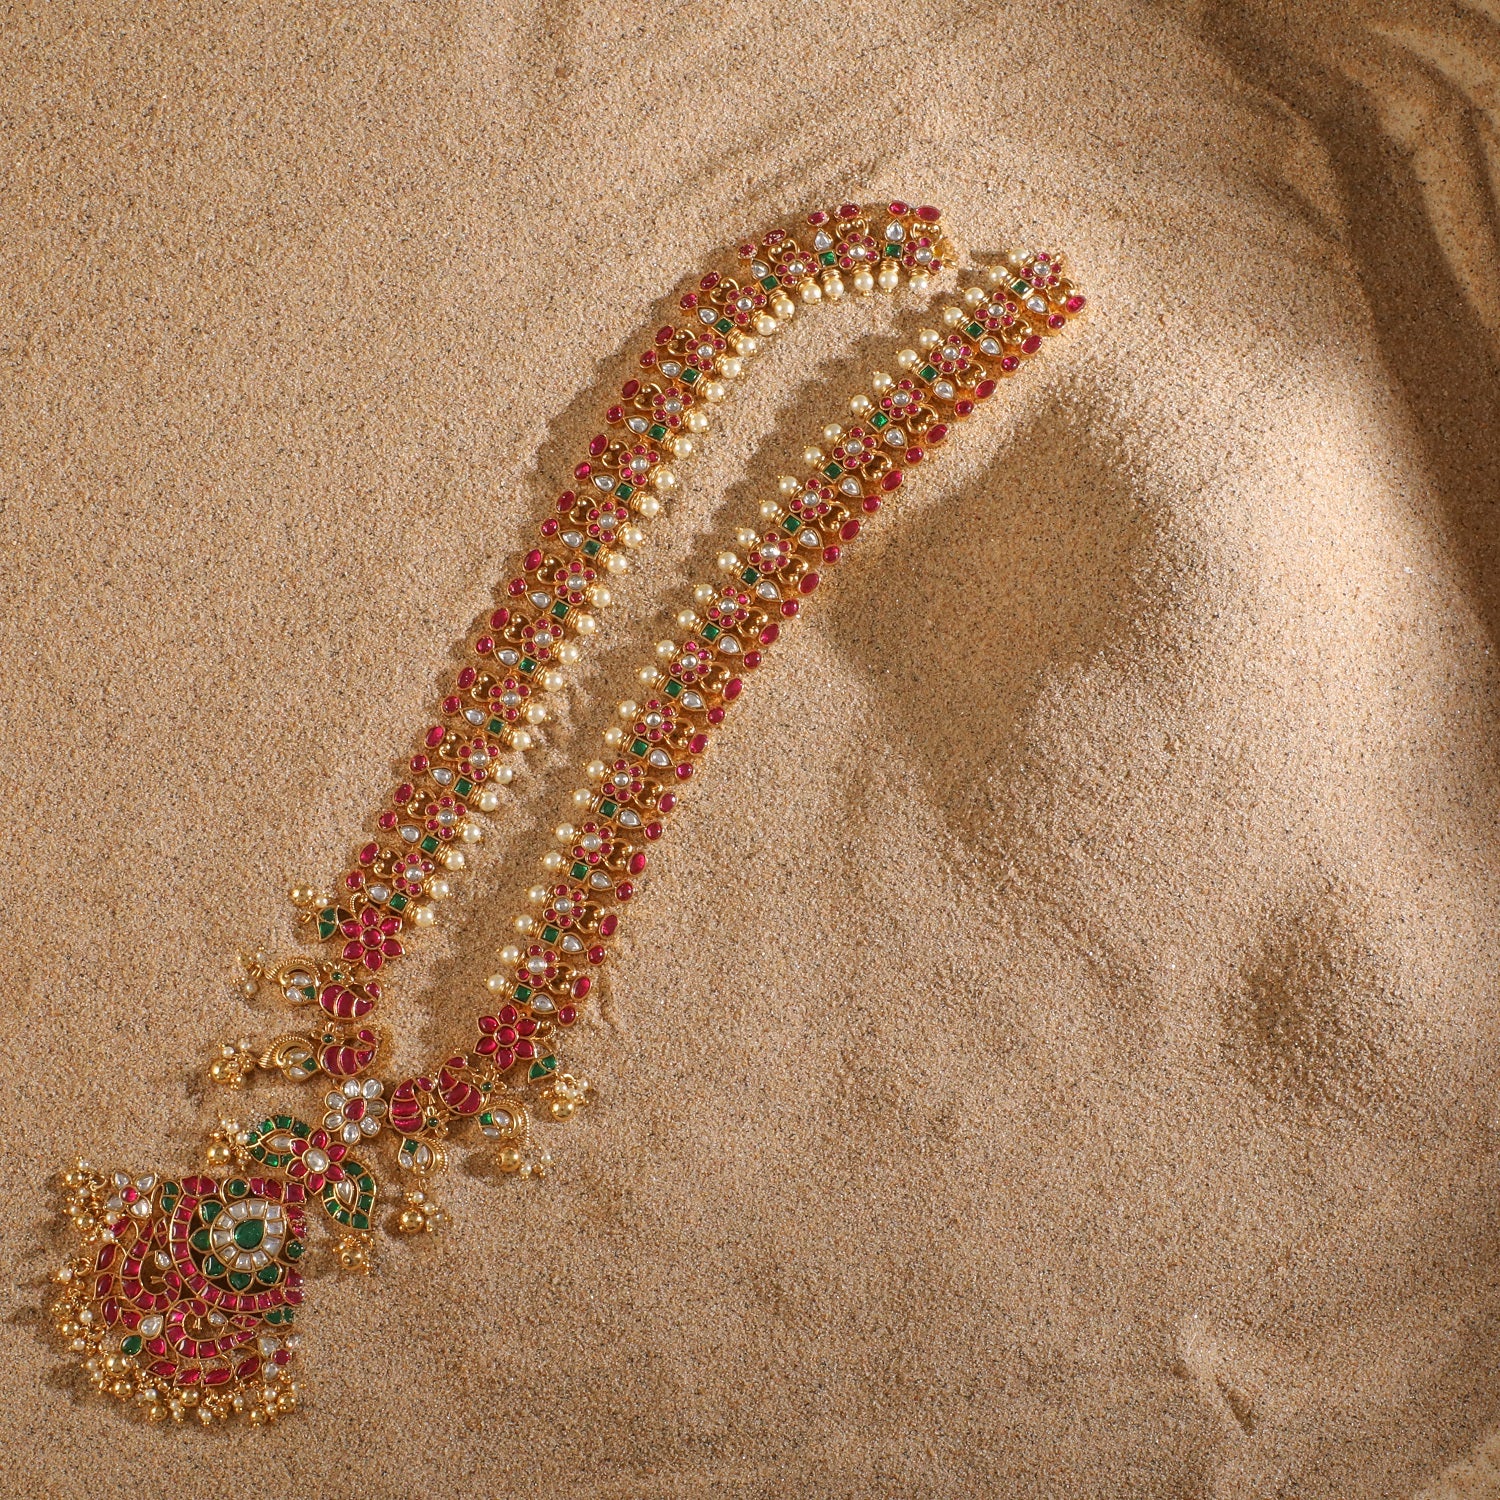 Chunky Charm Necklace – Jennifer Miller Jewelry